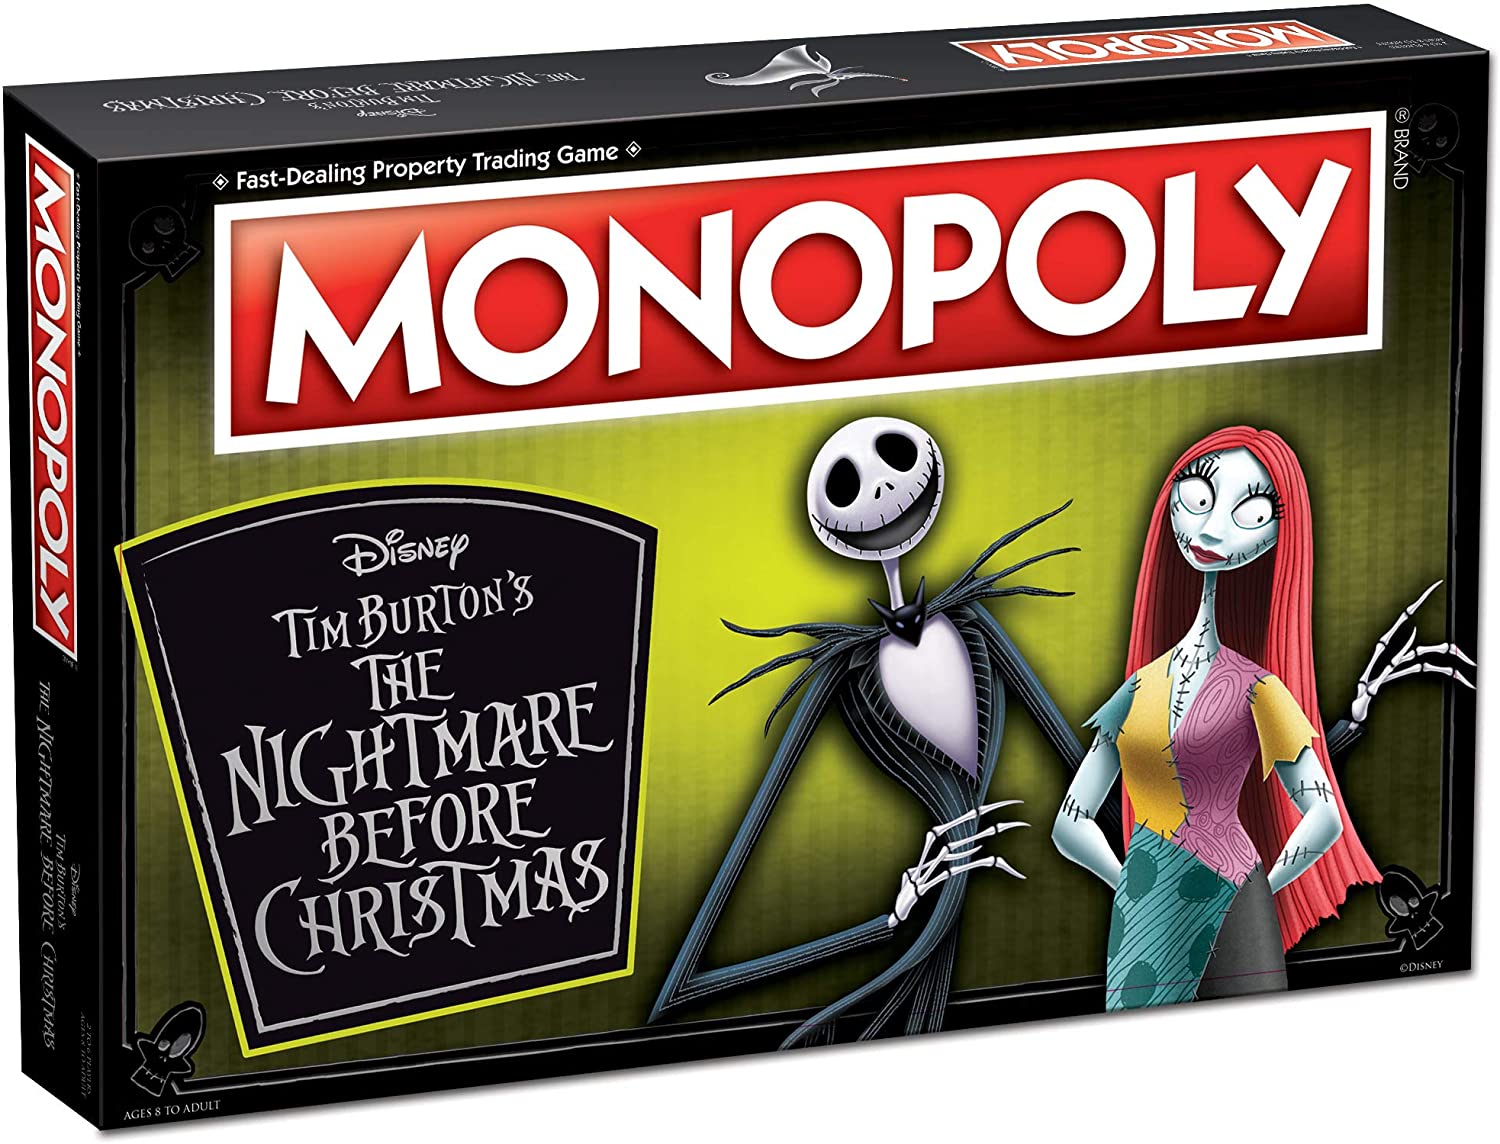 Disney Time Burton's Nightmare Before Christmas Monopoly Game